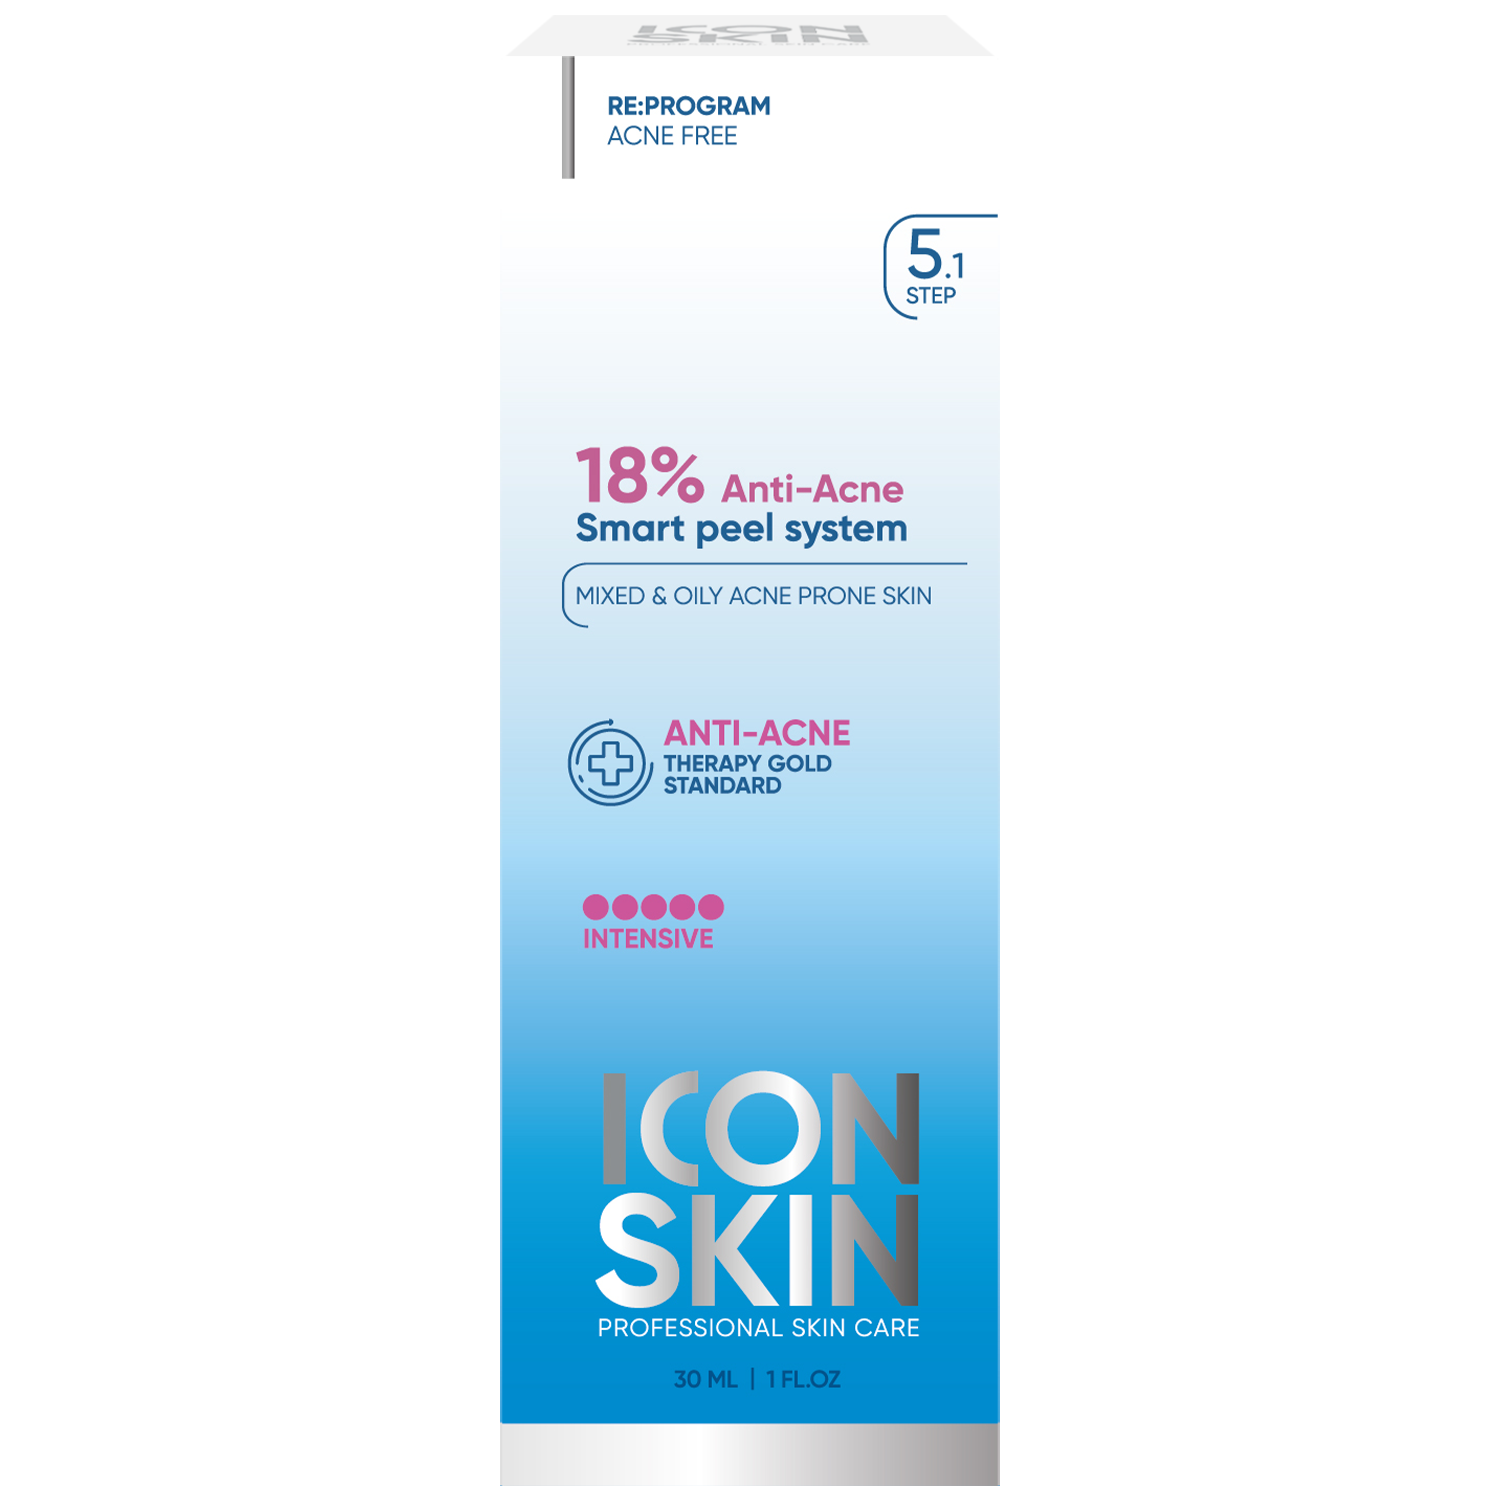 Icon skin состав. Пилинг Айкон скин. Icon Skin пилинг 18. Icon Skin, пилинг для лица 18% Anti-acne. Отзывы icon Skin пилинг 18.